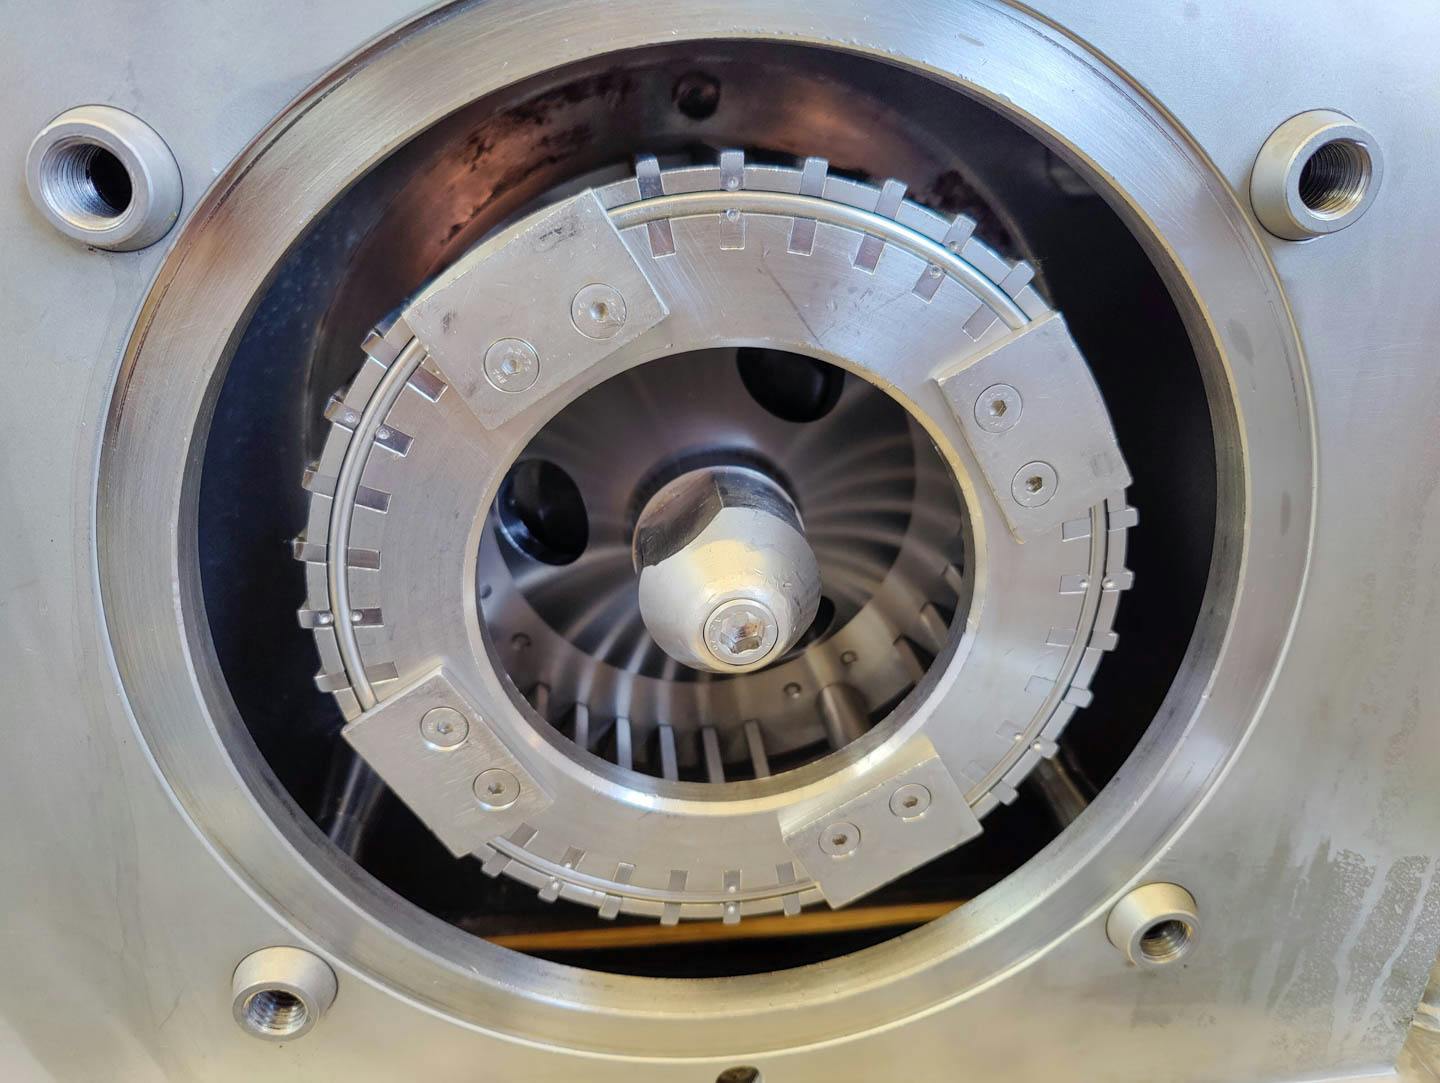 Bauermeister UMT 0.3 N Ex "blast rotor" - Fijne Impactmolen - image 8